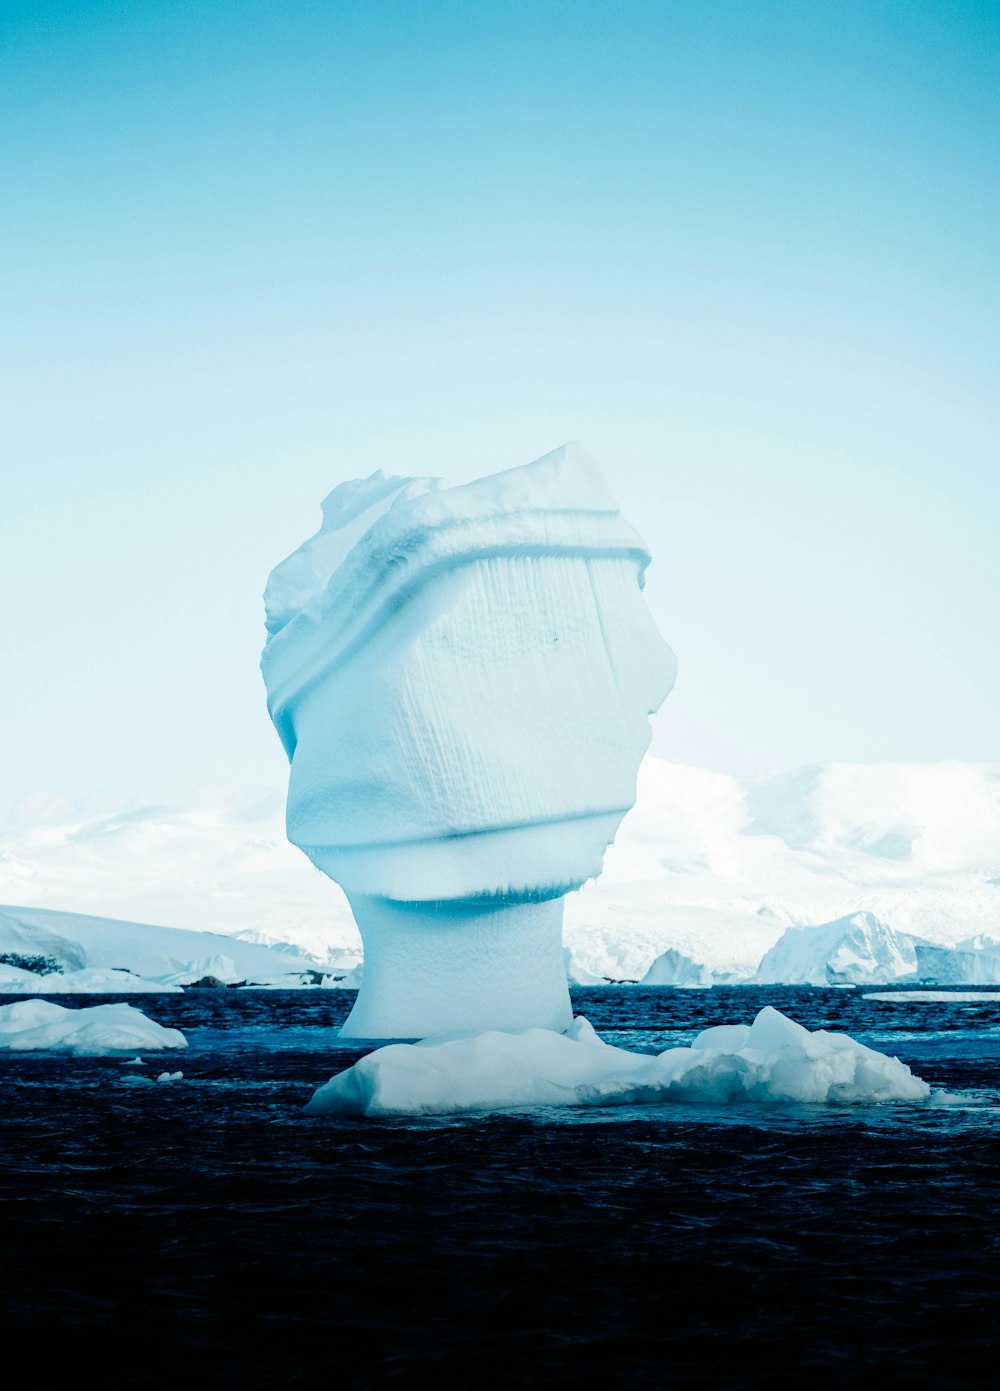 Un gran iceberg flotando sobre un cuerpo de agua